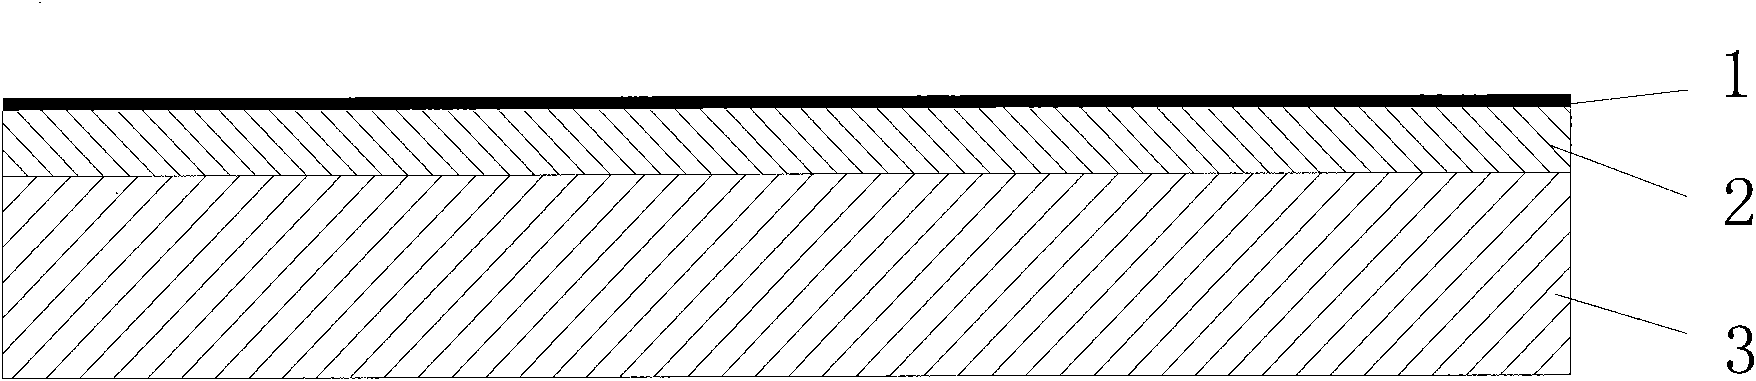 Manufacturing method of flame retardant solid composite floor